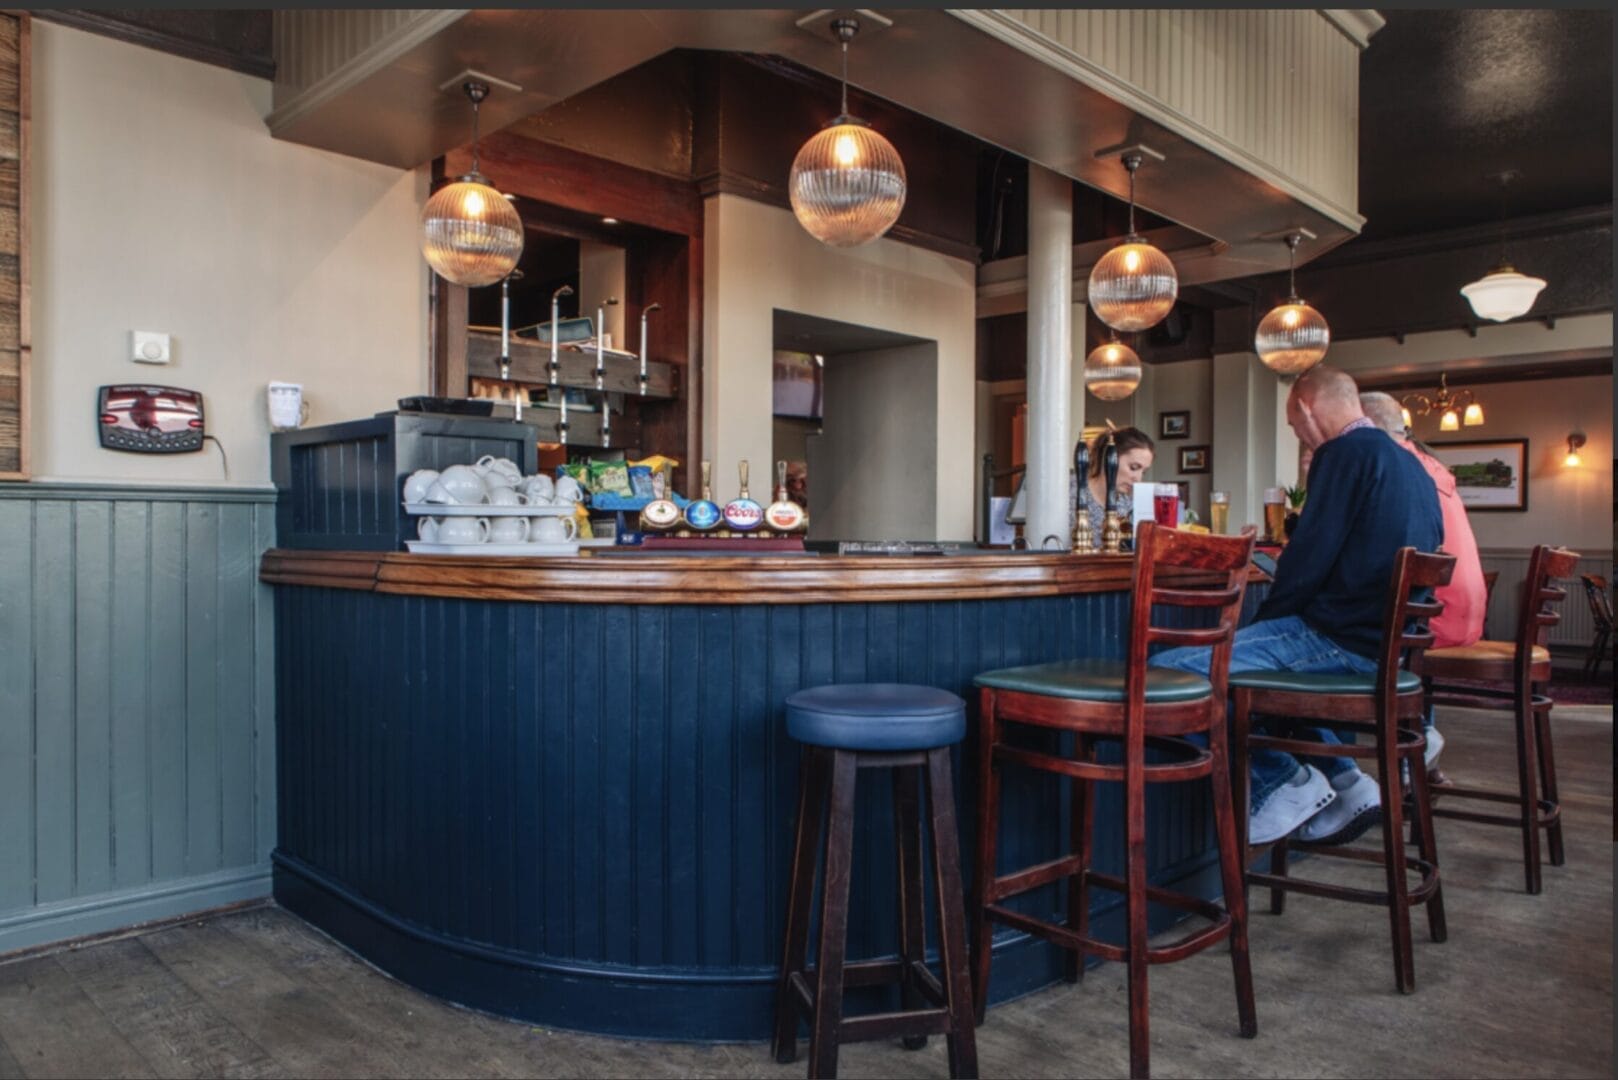 Management Partnership Pubs In London – Run The Railway Tavern !